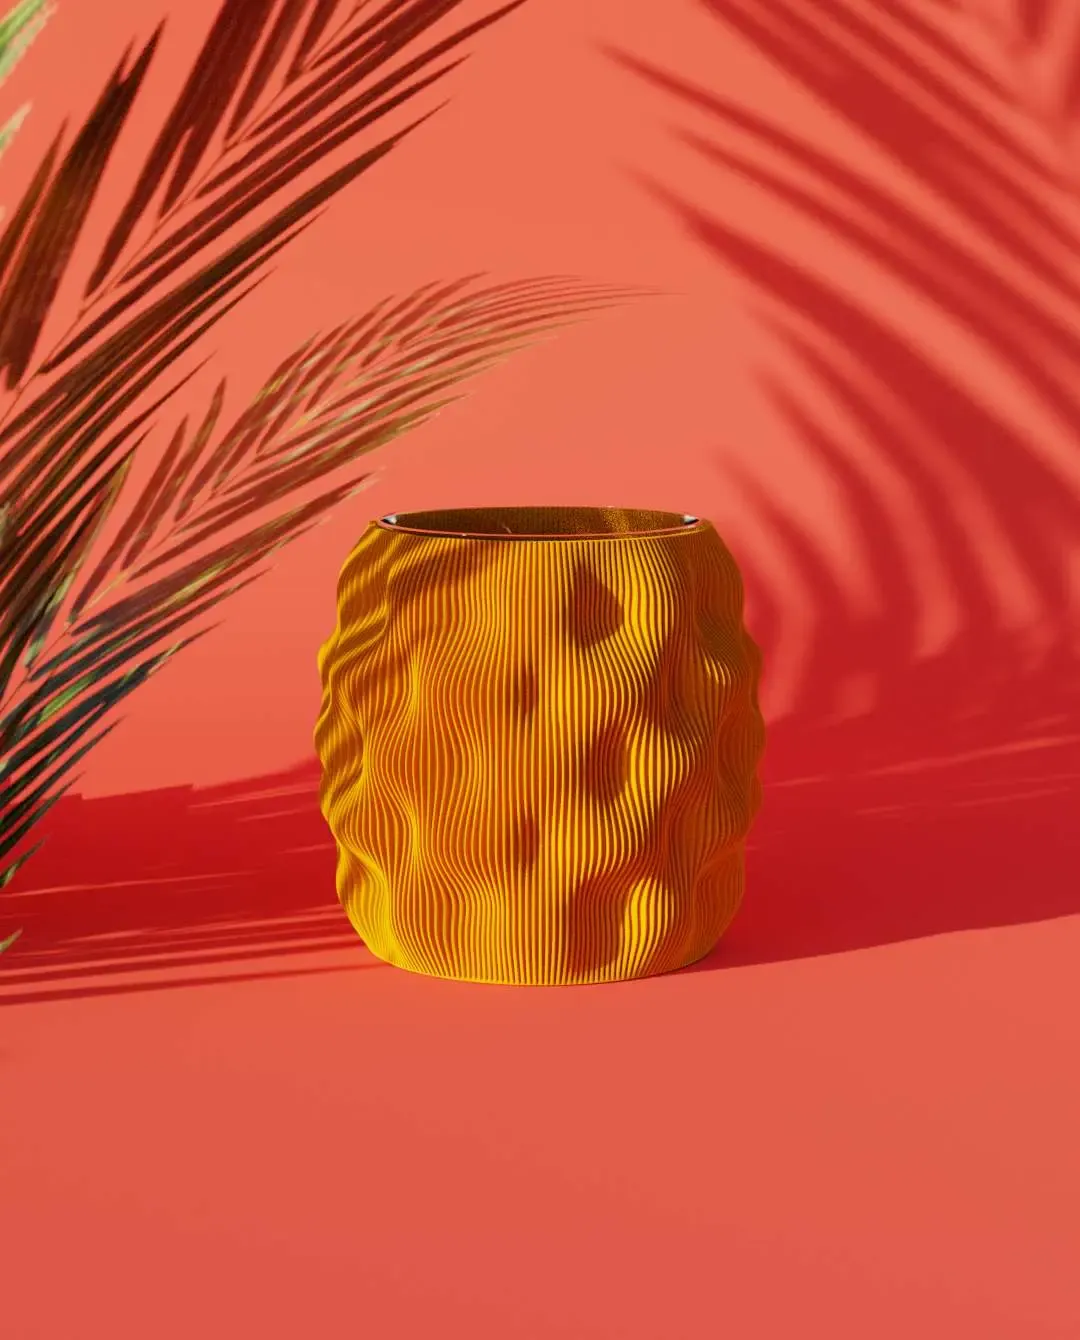 Fire Vase